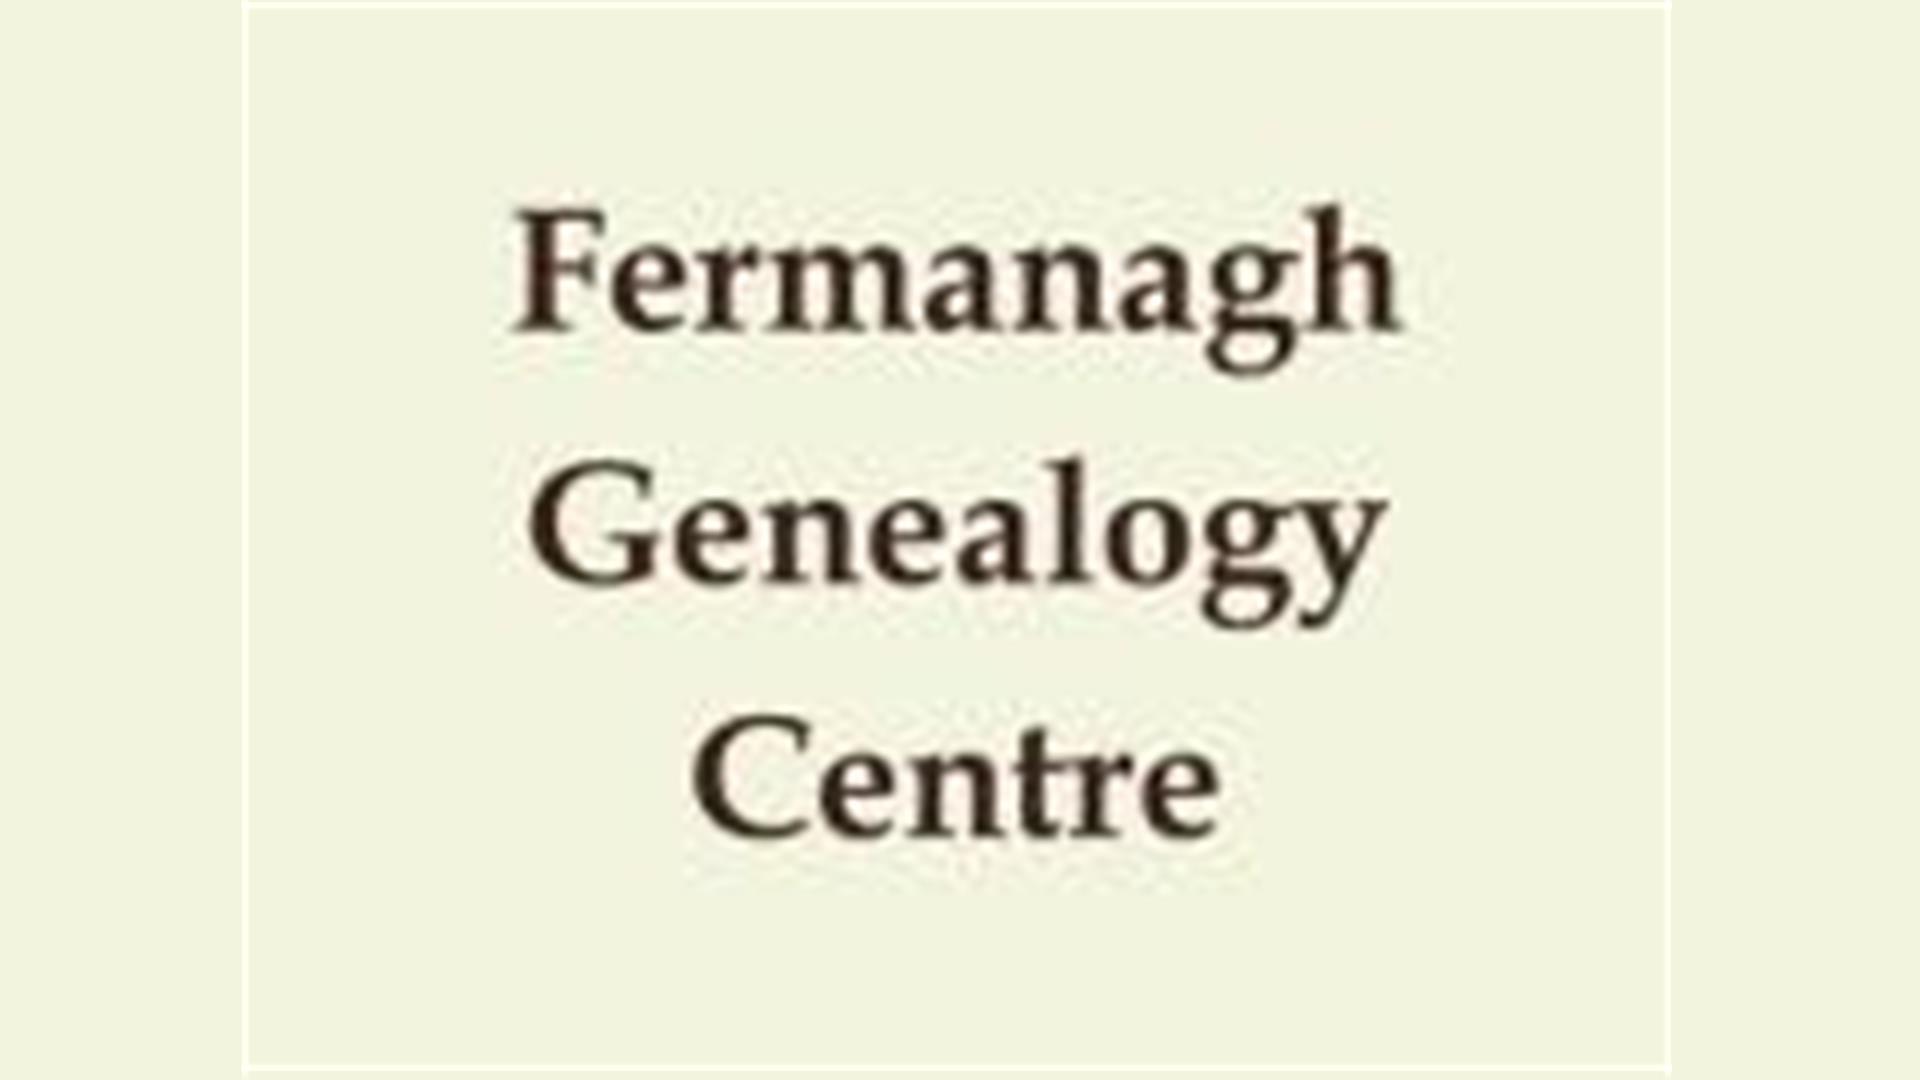 Fermanagh Genealogy Centre